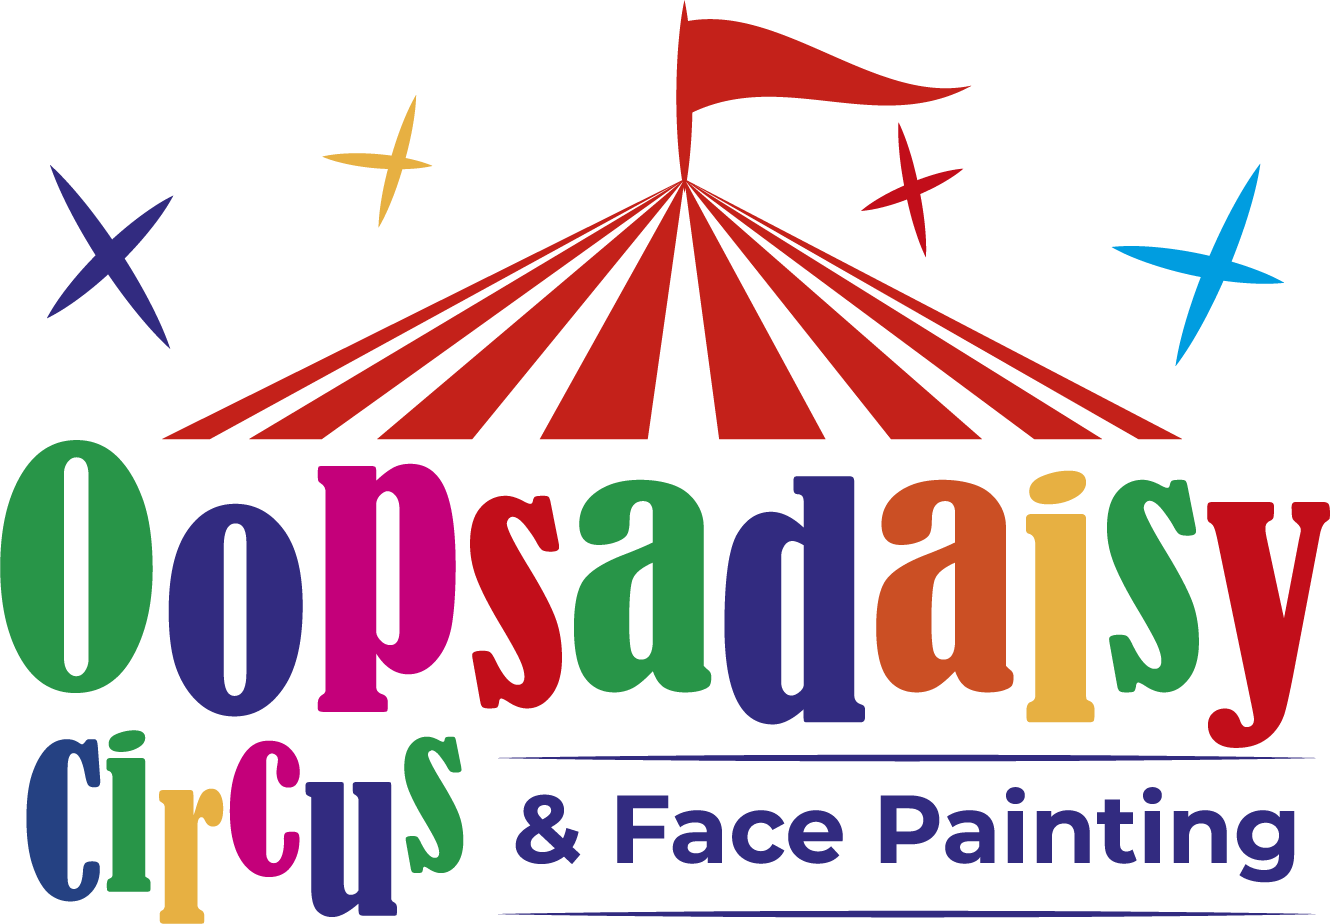 Oopsadaisy Circus & Face Painting!